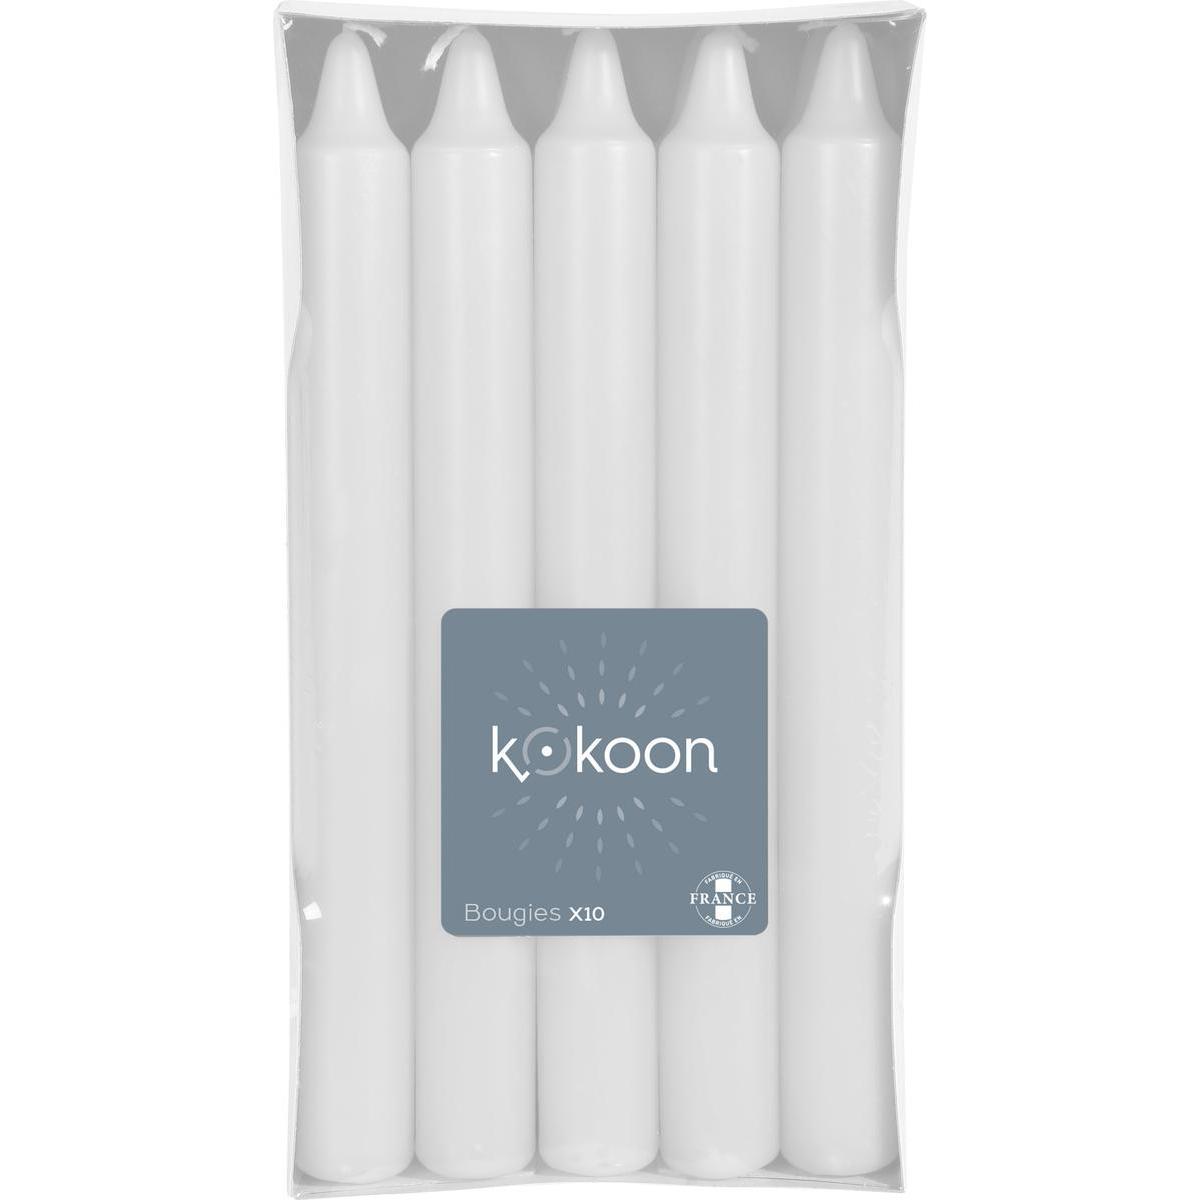 10 bougies ménage non-parfumées - ø 0.9 x H 18 cm - Différents coloris - Blanc - K.KOON